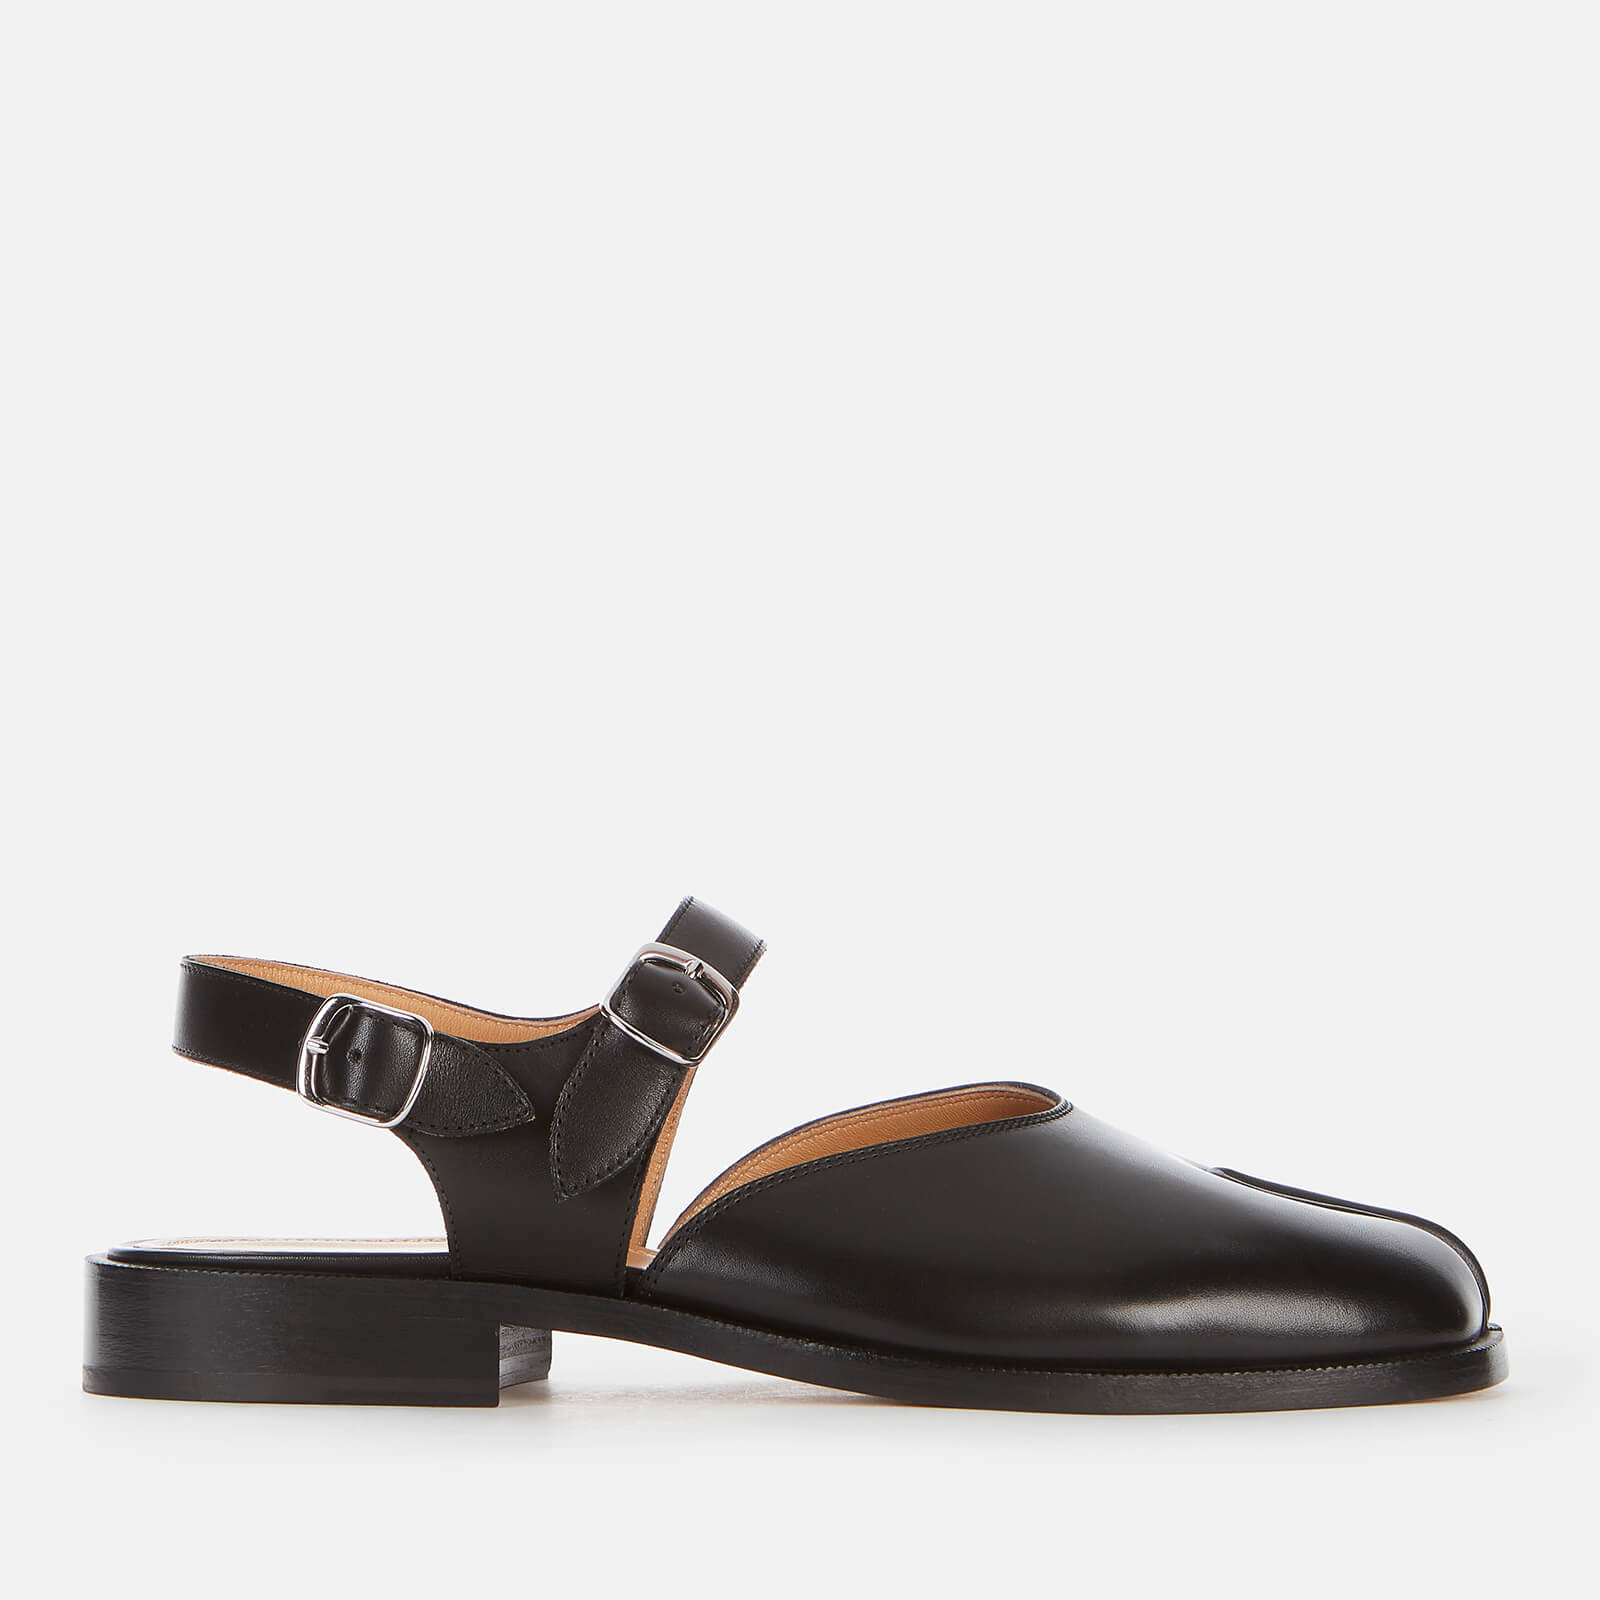 Maison Margiela Men's Tabi Leather Sandals - Black - UK 7